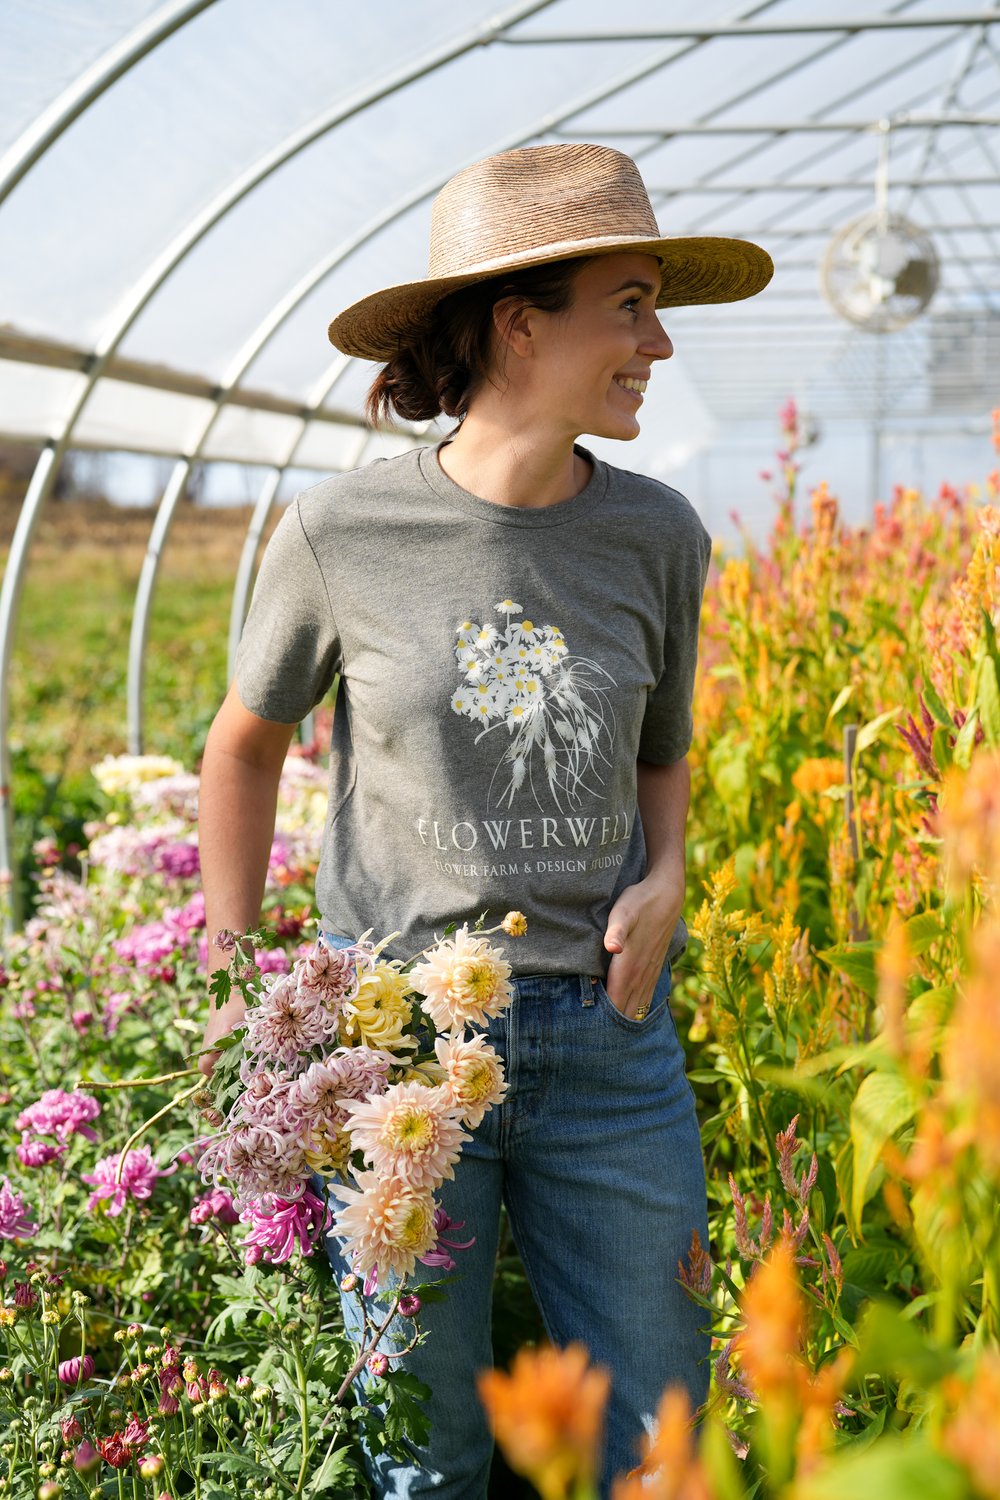 flower farm t shirt flowerwell — Flowerwell Farm and Design Studio